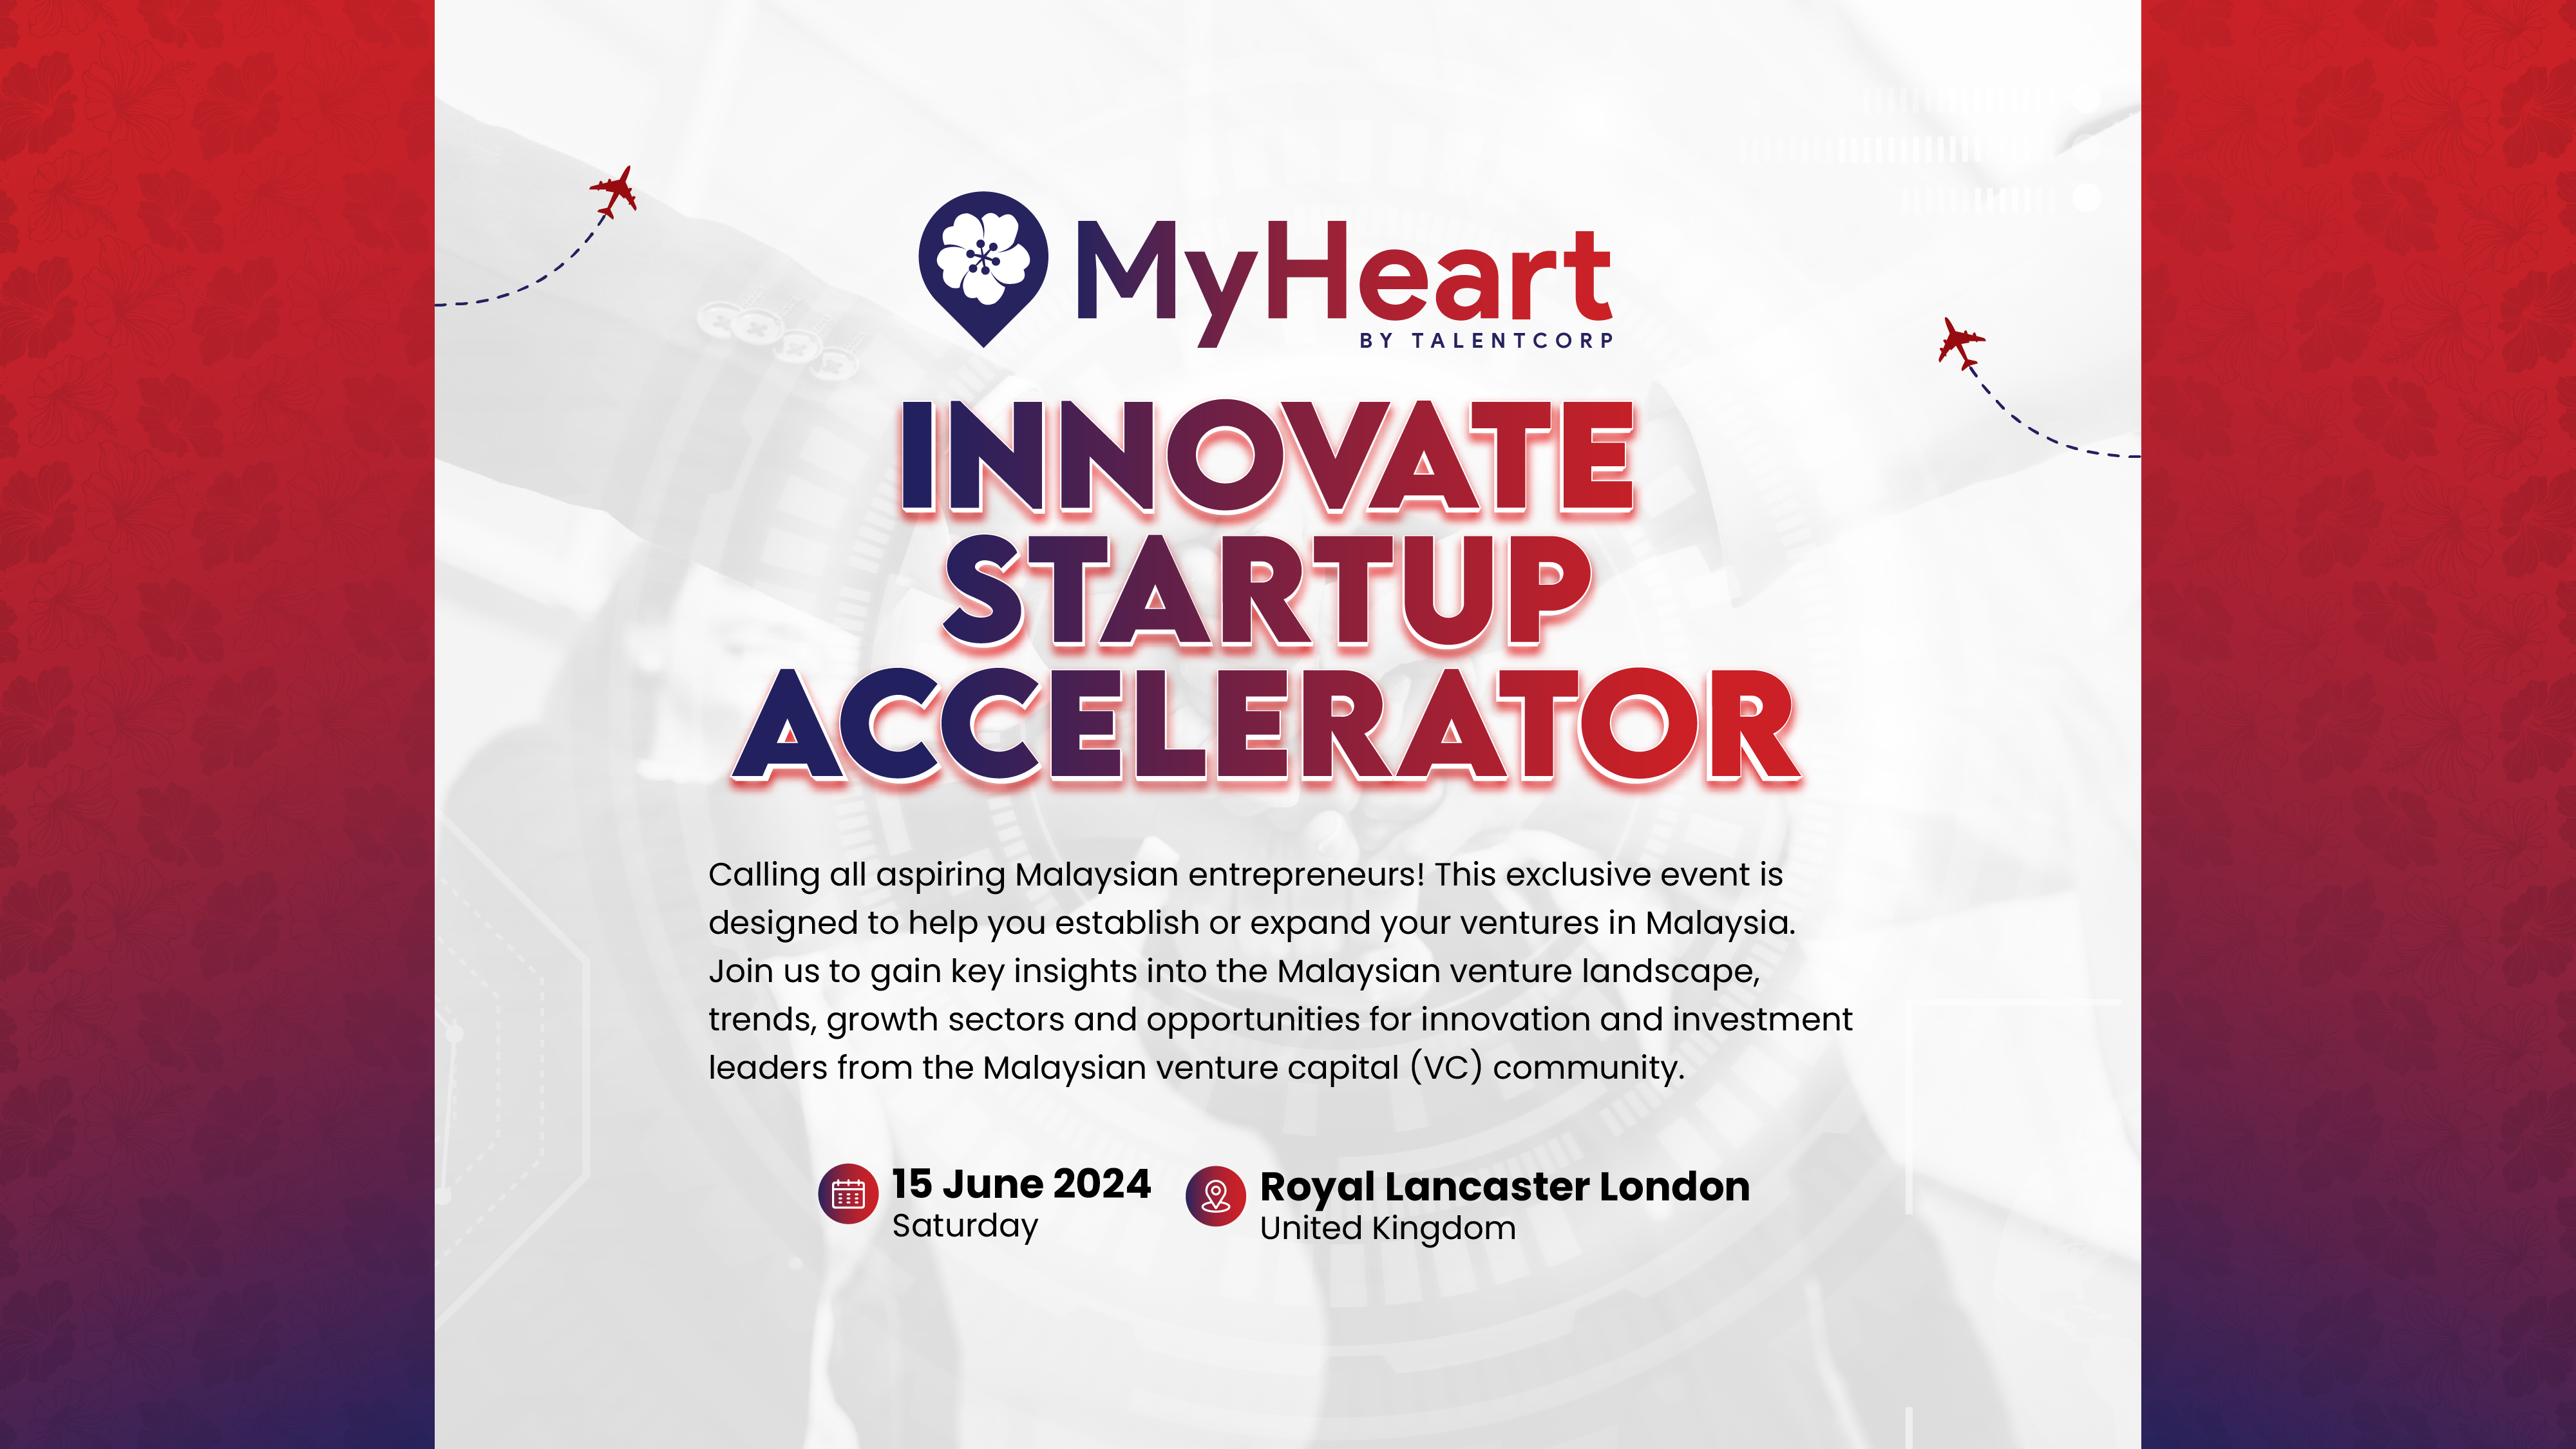 MyHeart Innovate Startup Accelerator